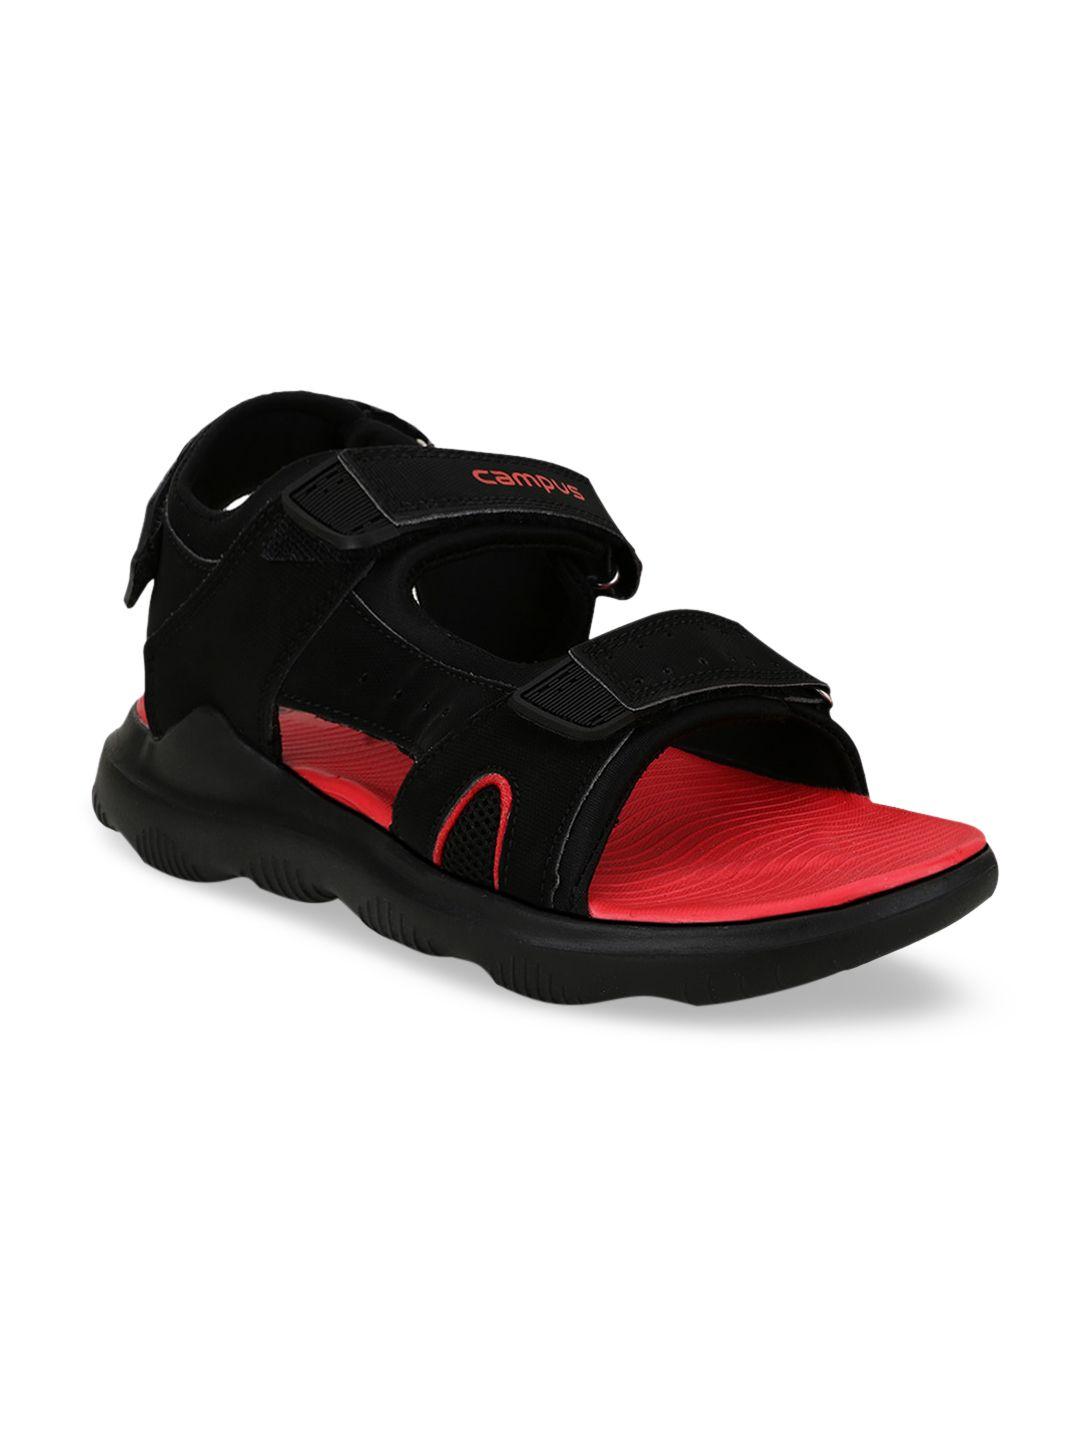 campus-men-black-&-red-solid-sports-sandals